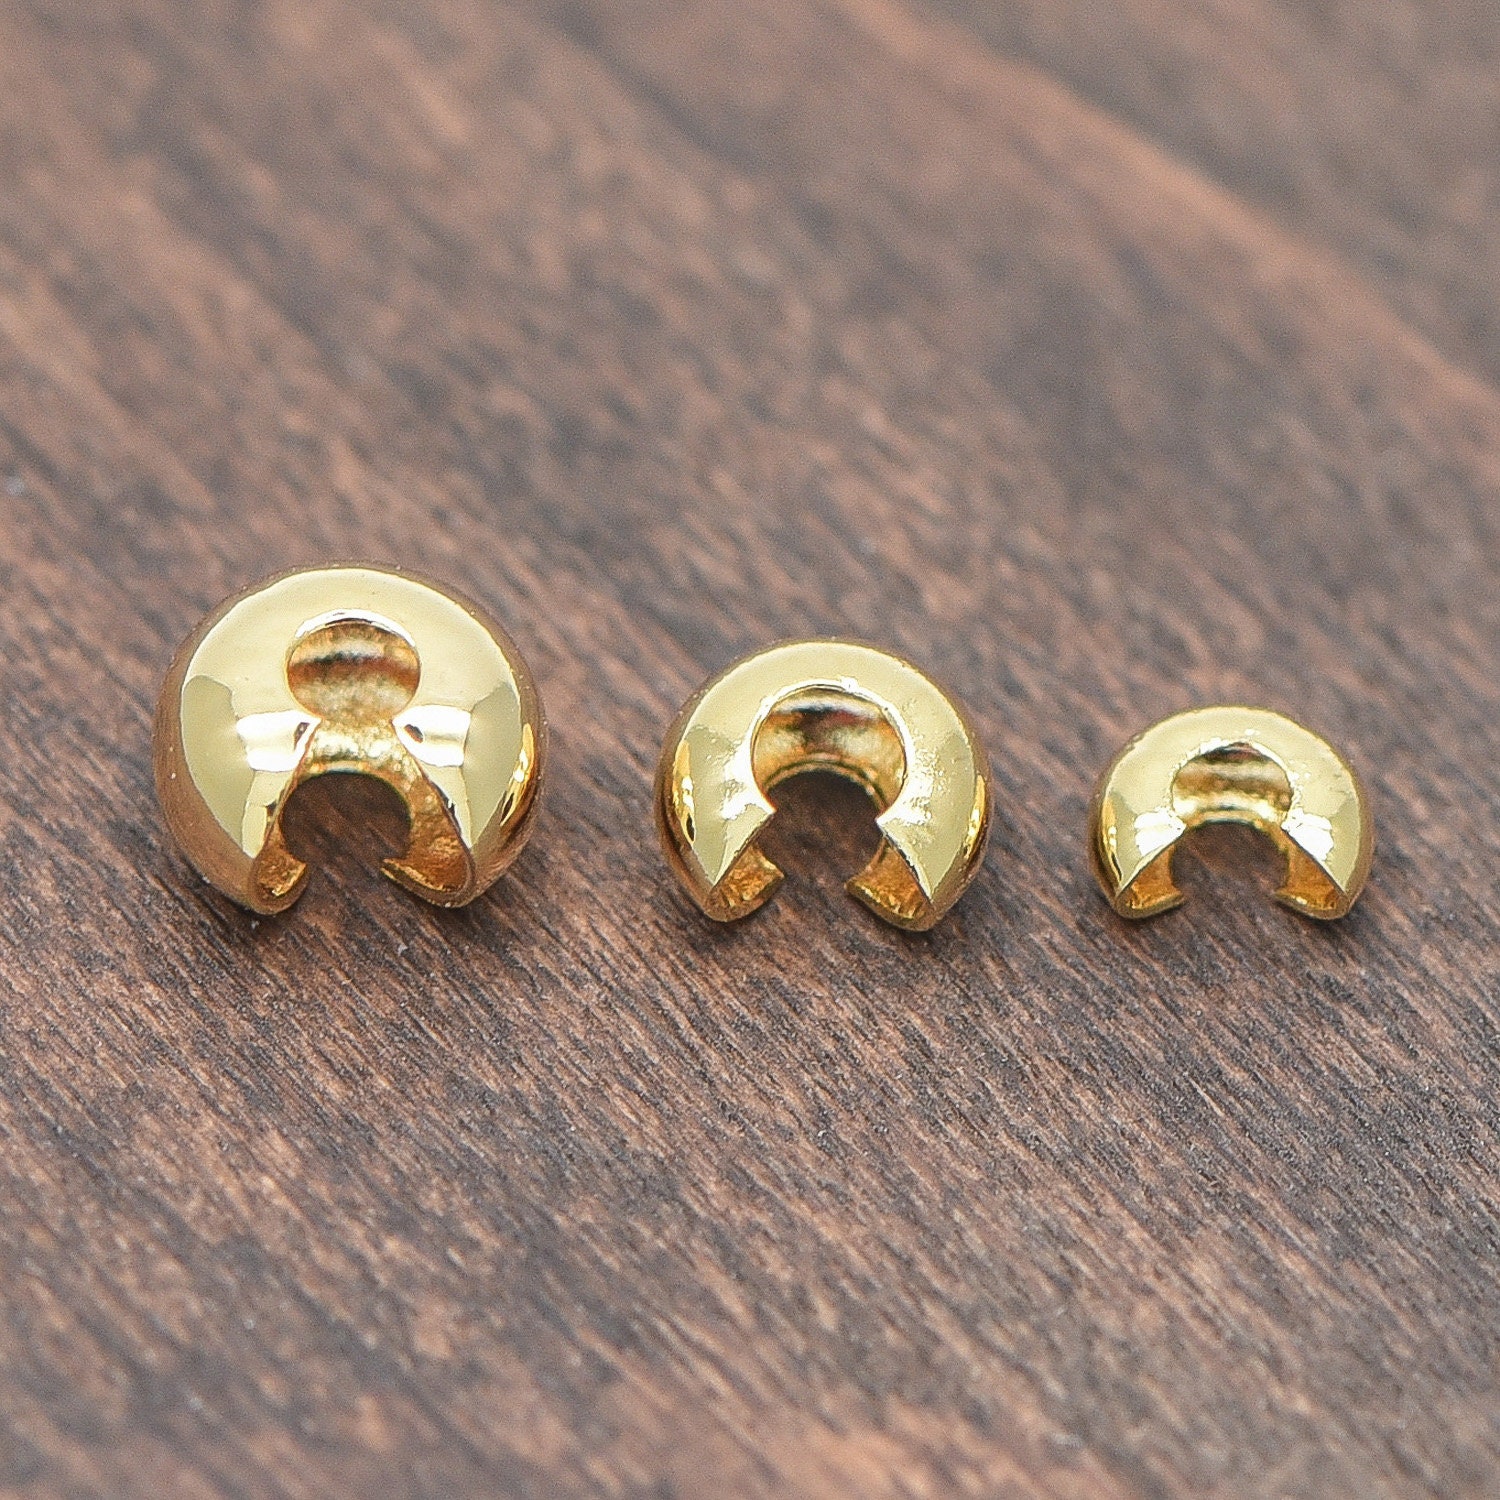 2.5mm Gold Filled Crimp Covers